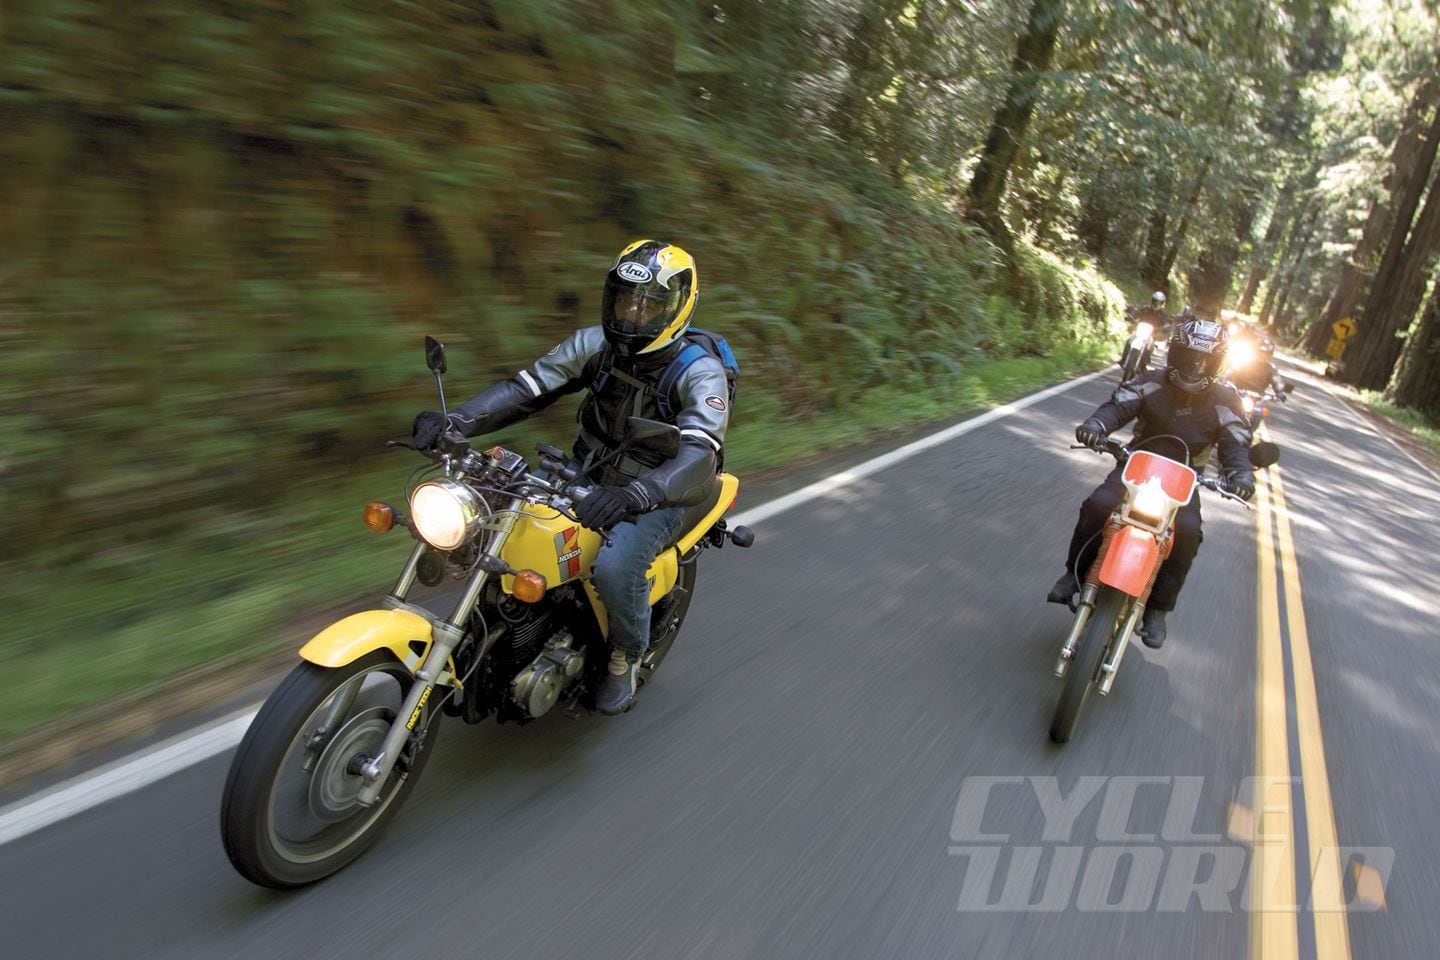 China Ride on Toys Motorbike 50cc Upgraded Kick Start for Kids